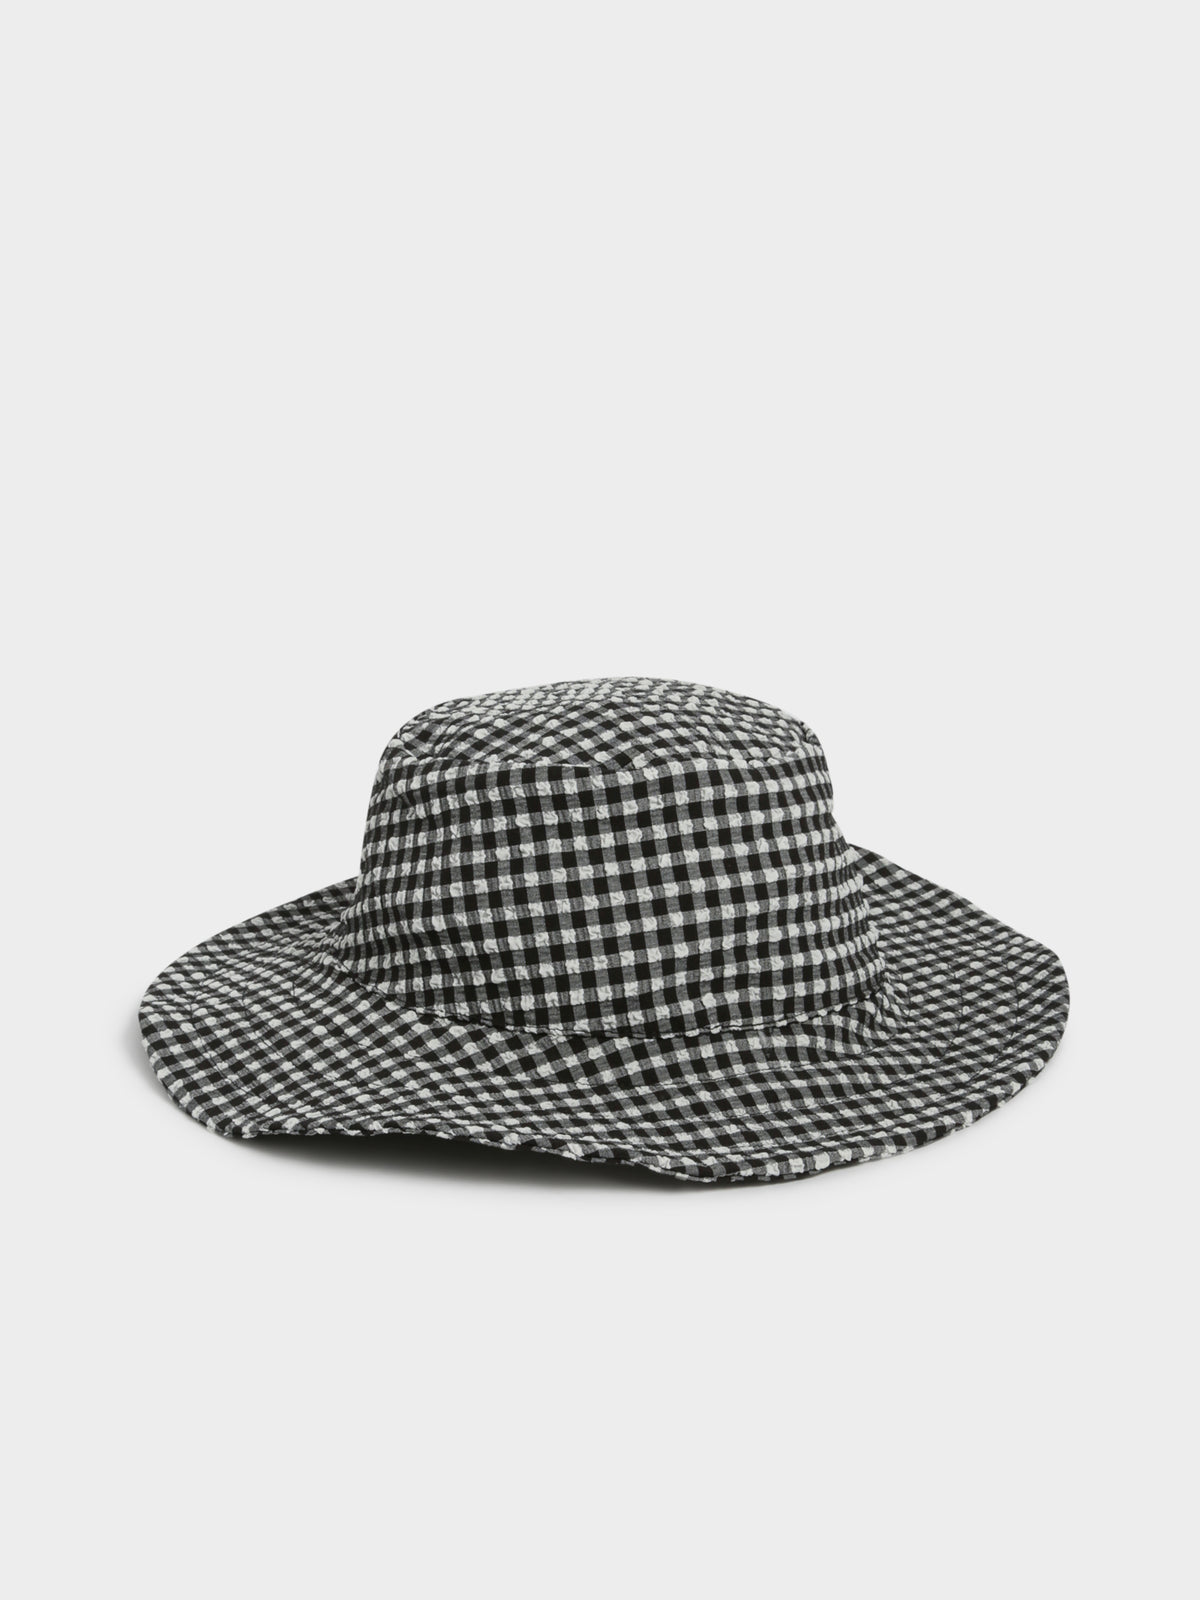 Check Bucket Hat in Black Gingham